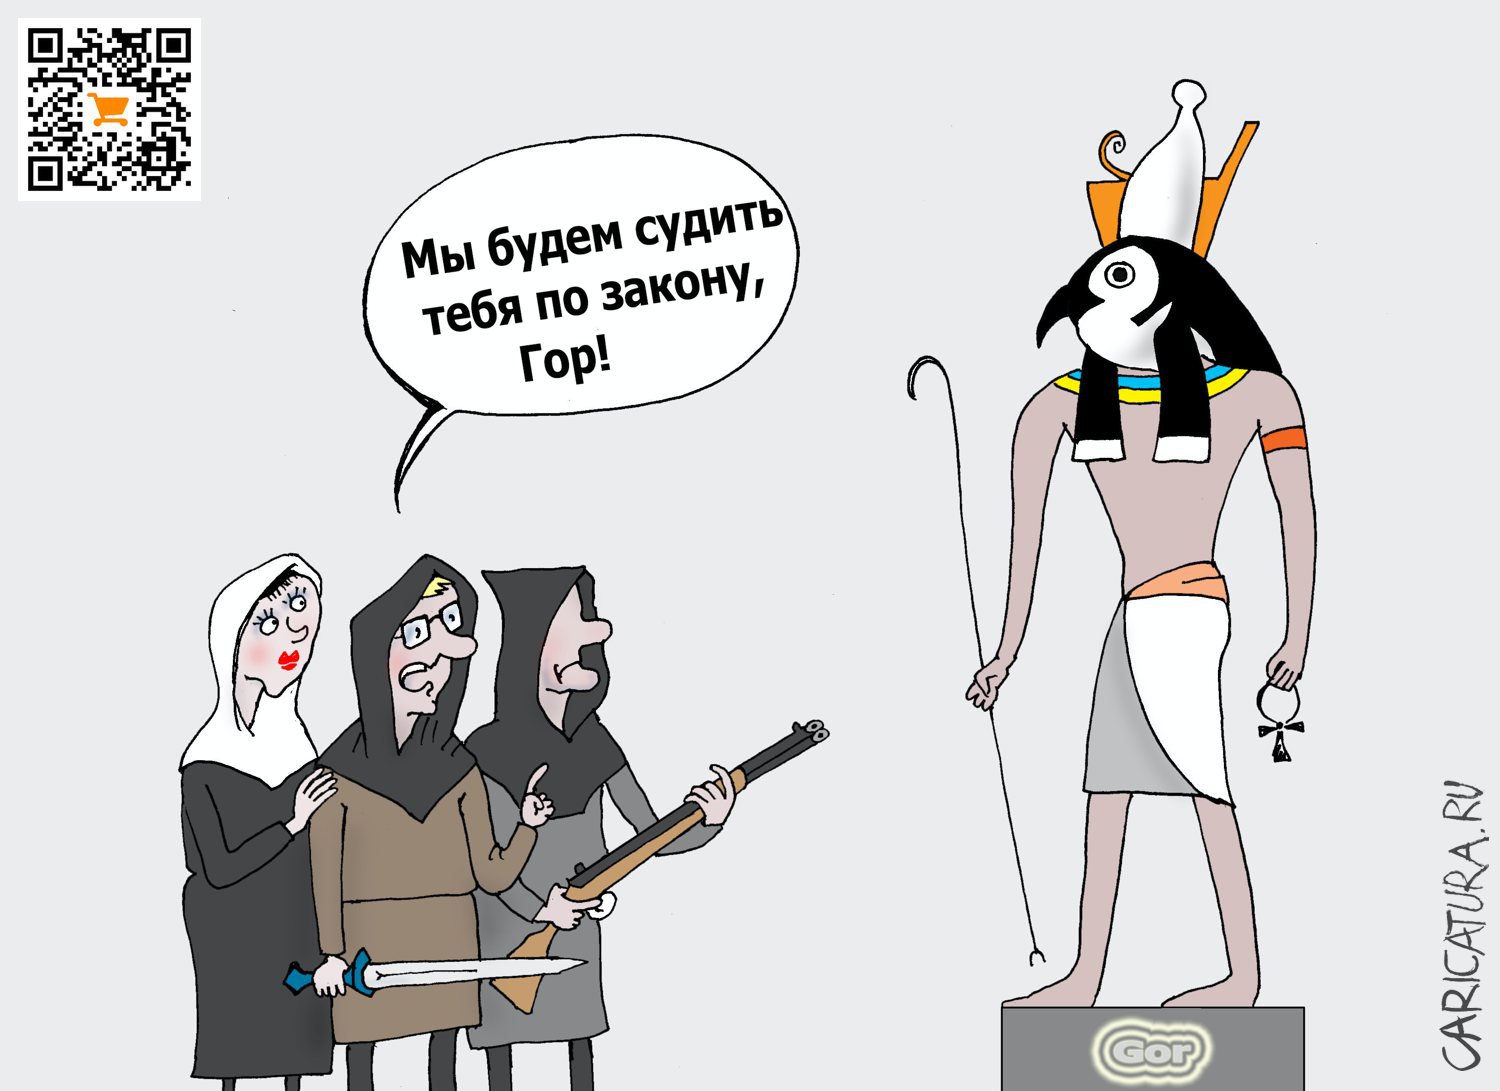 Карикатура "Советская мифология", Валерий Тарасенко